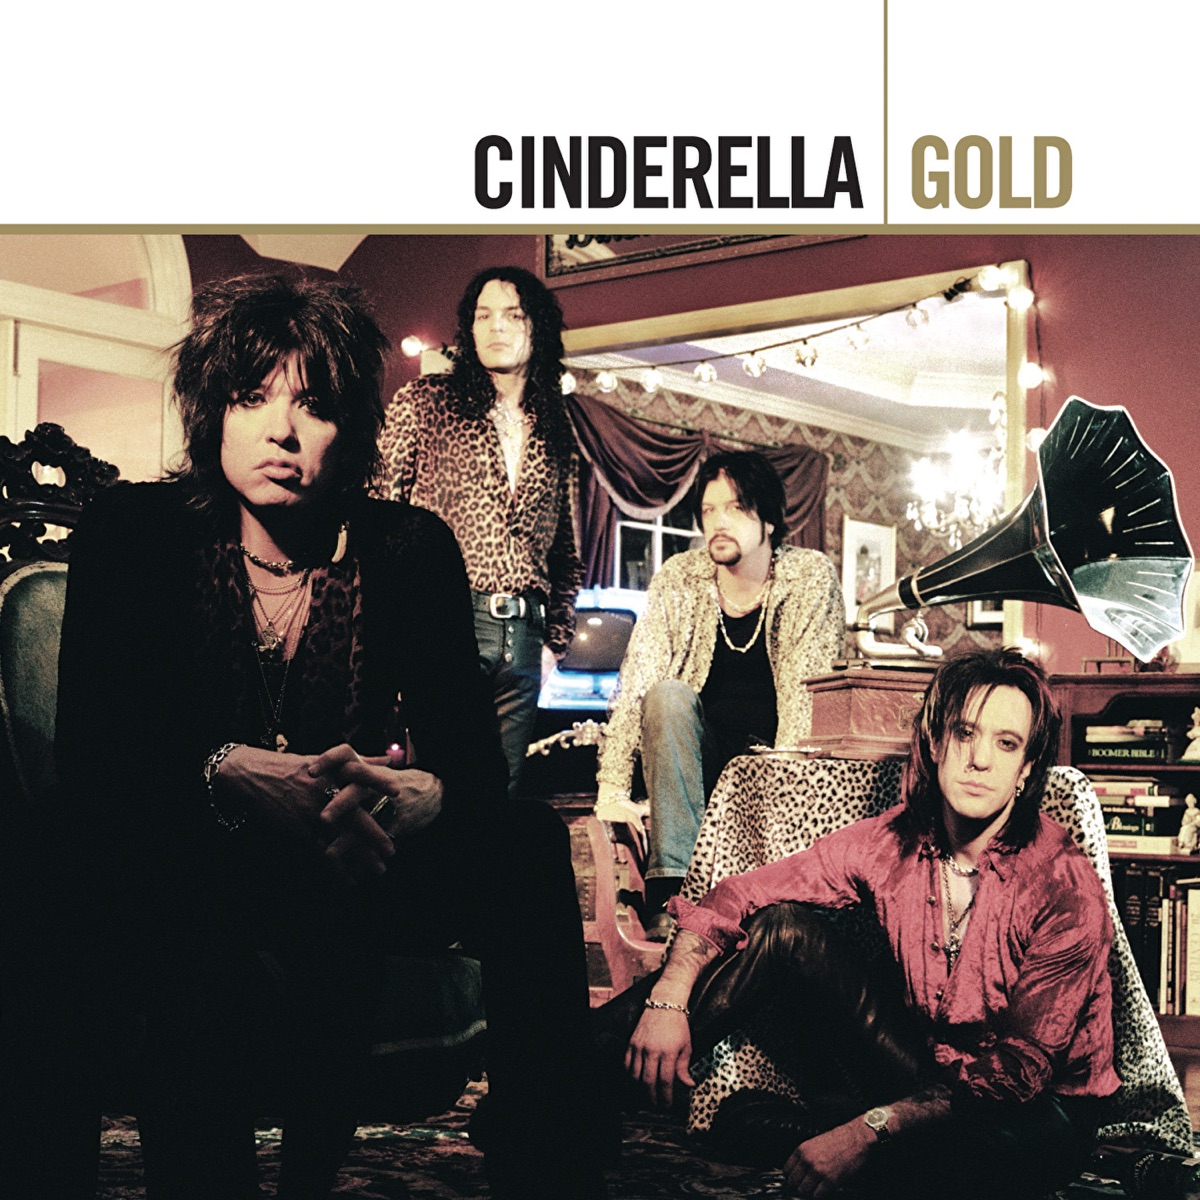 Long Cold Winter - Album by Cinderella - Apple Music